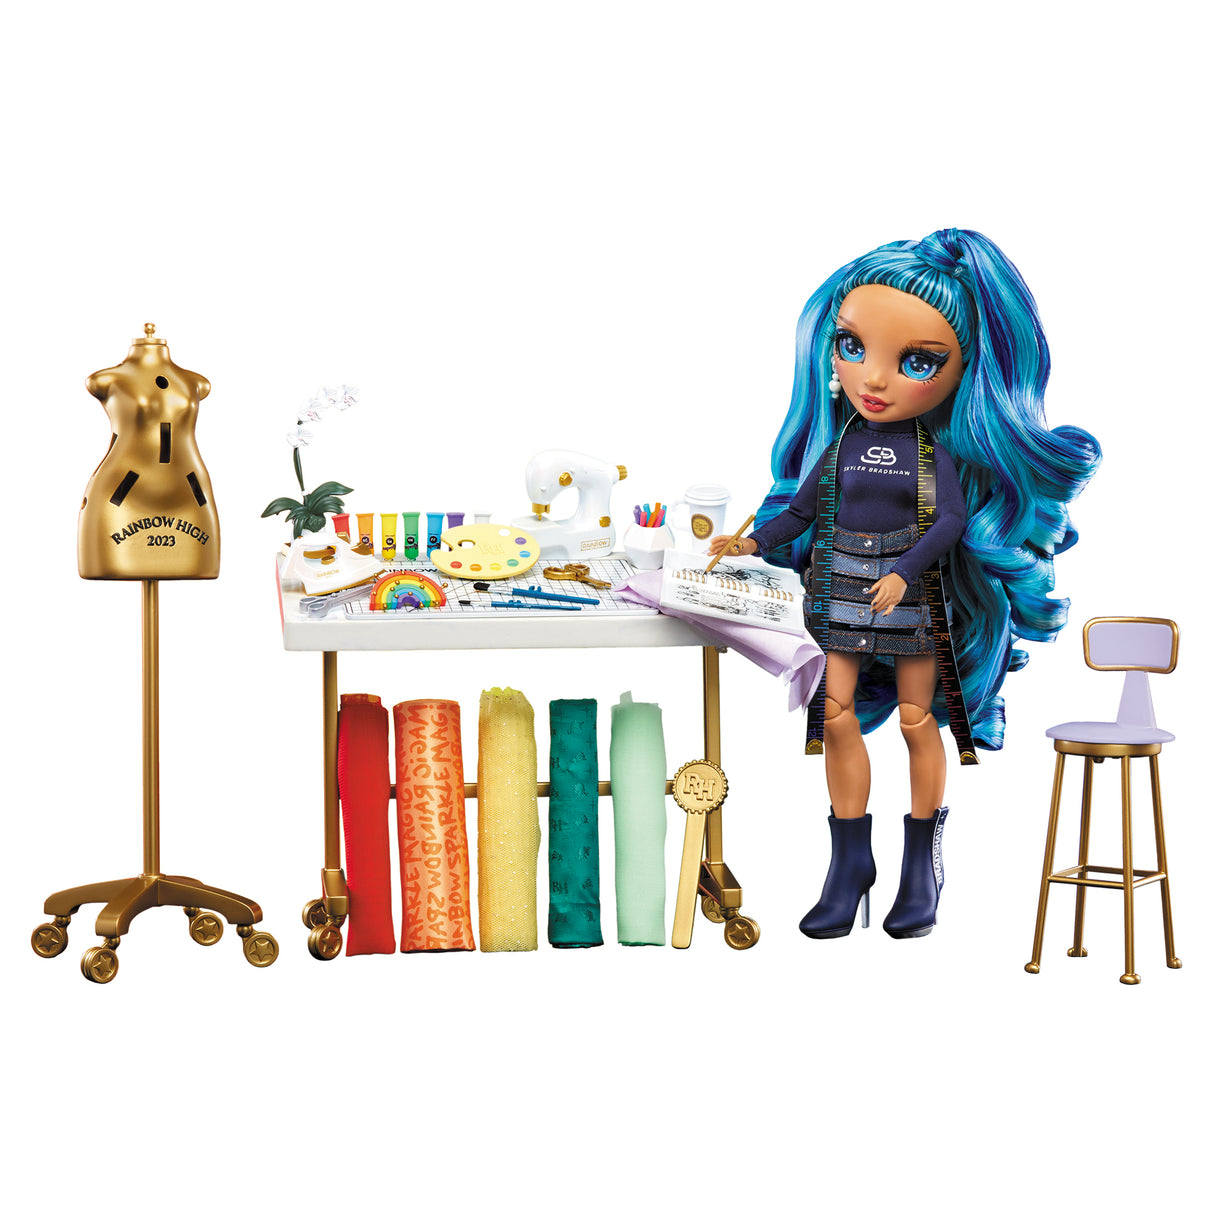 Rainbow High Dream & Design Fashion Studio Playset with Exclusive Blue Skyler Doll